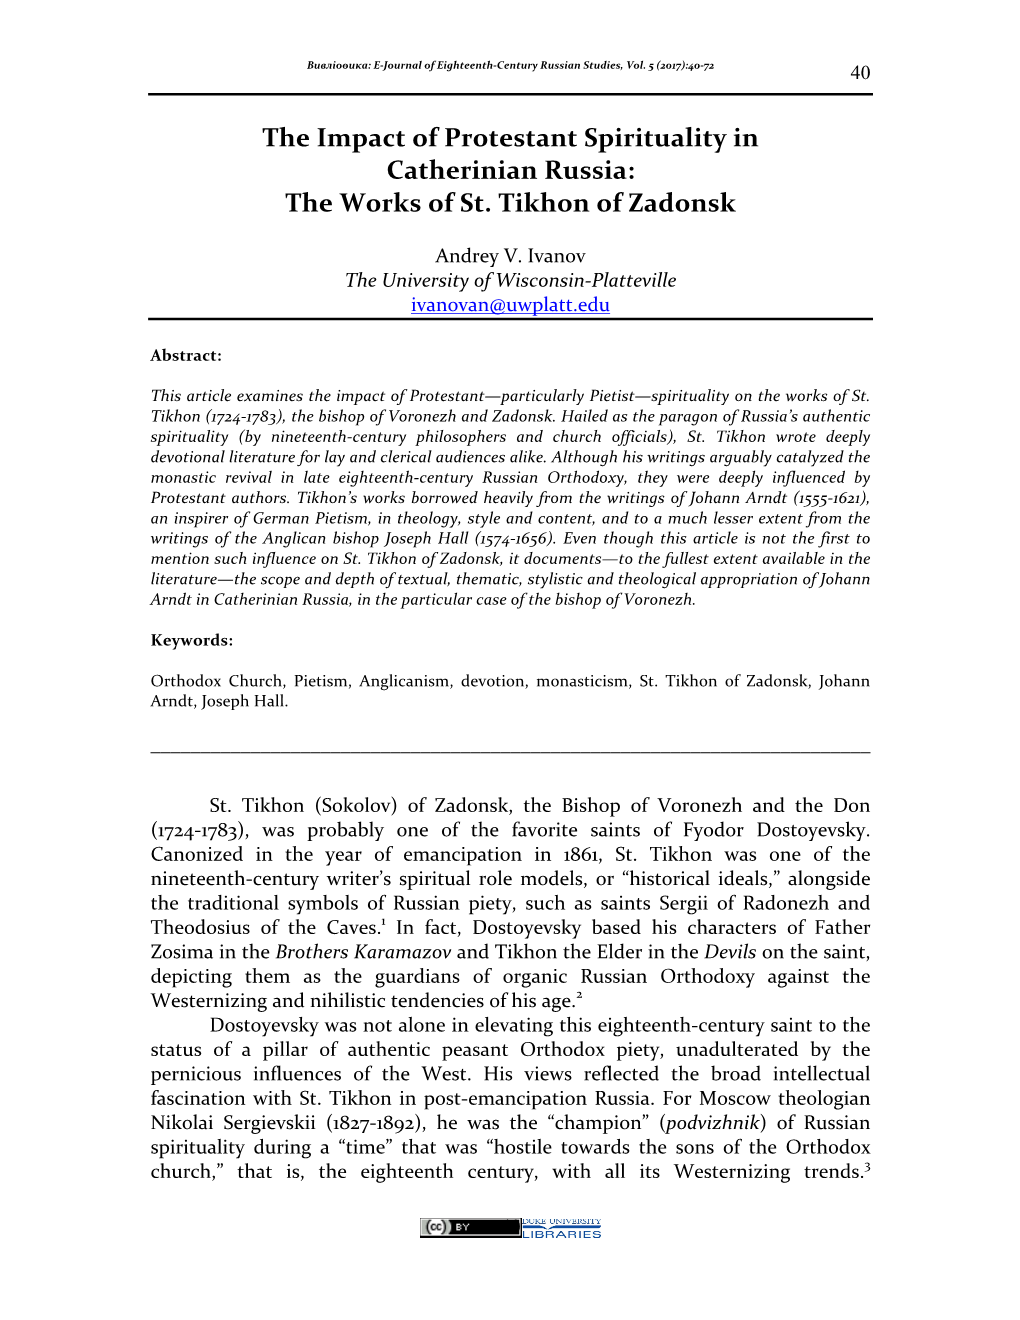 The Works of St. Tikhon of Zadonsk